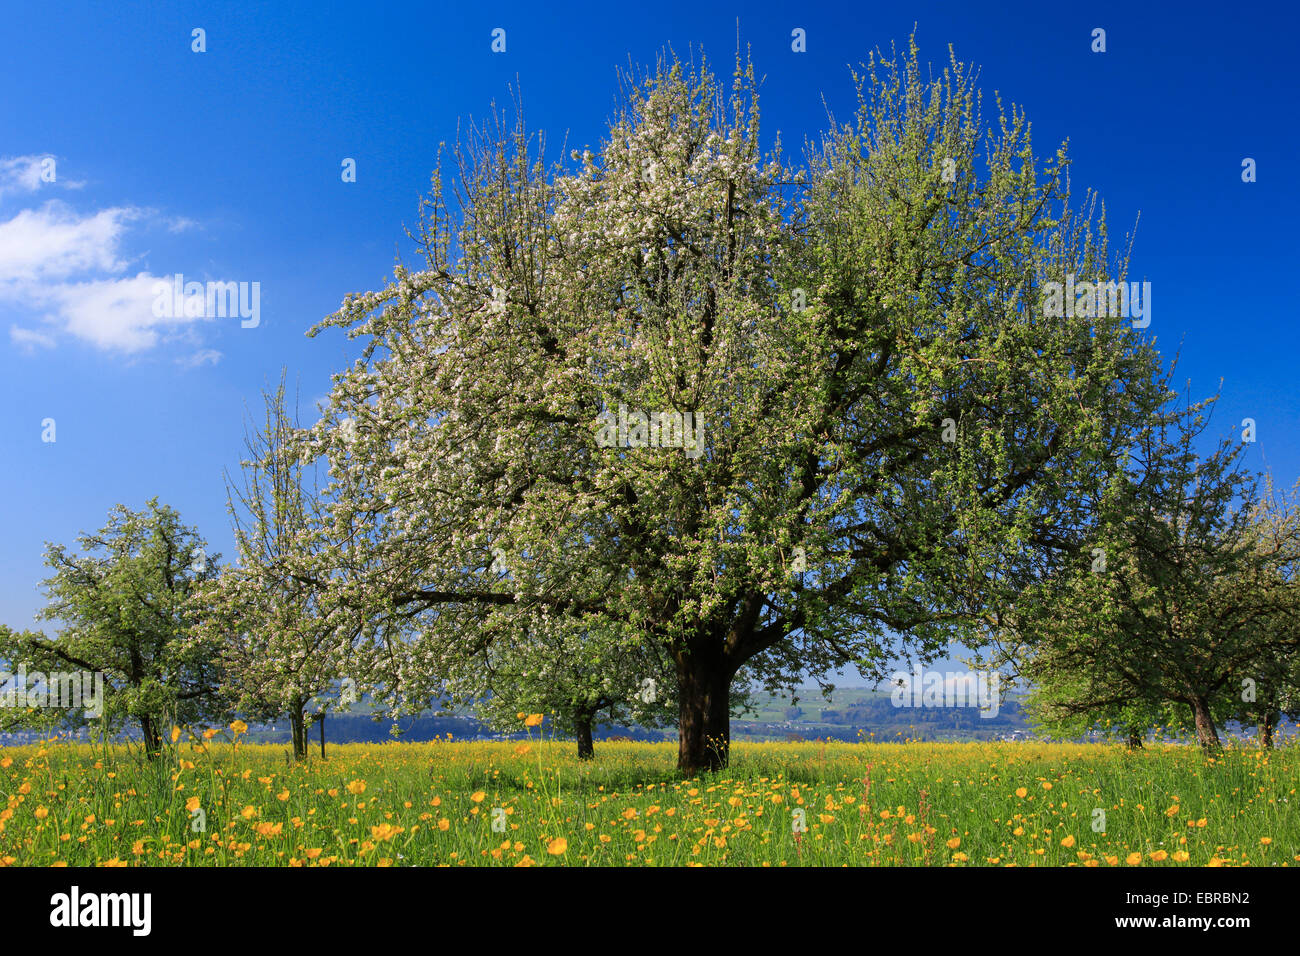 apple tree (Malus domestica), flowering apple trees in spring, Switzerland, Zuercher Oberland Stock Photo